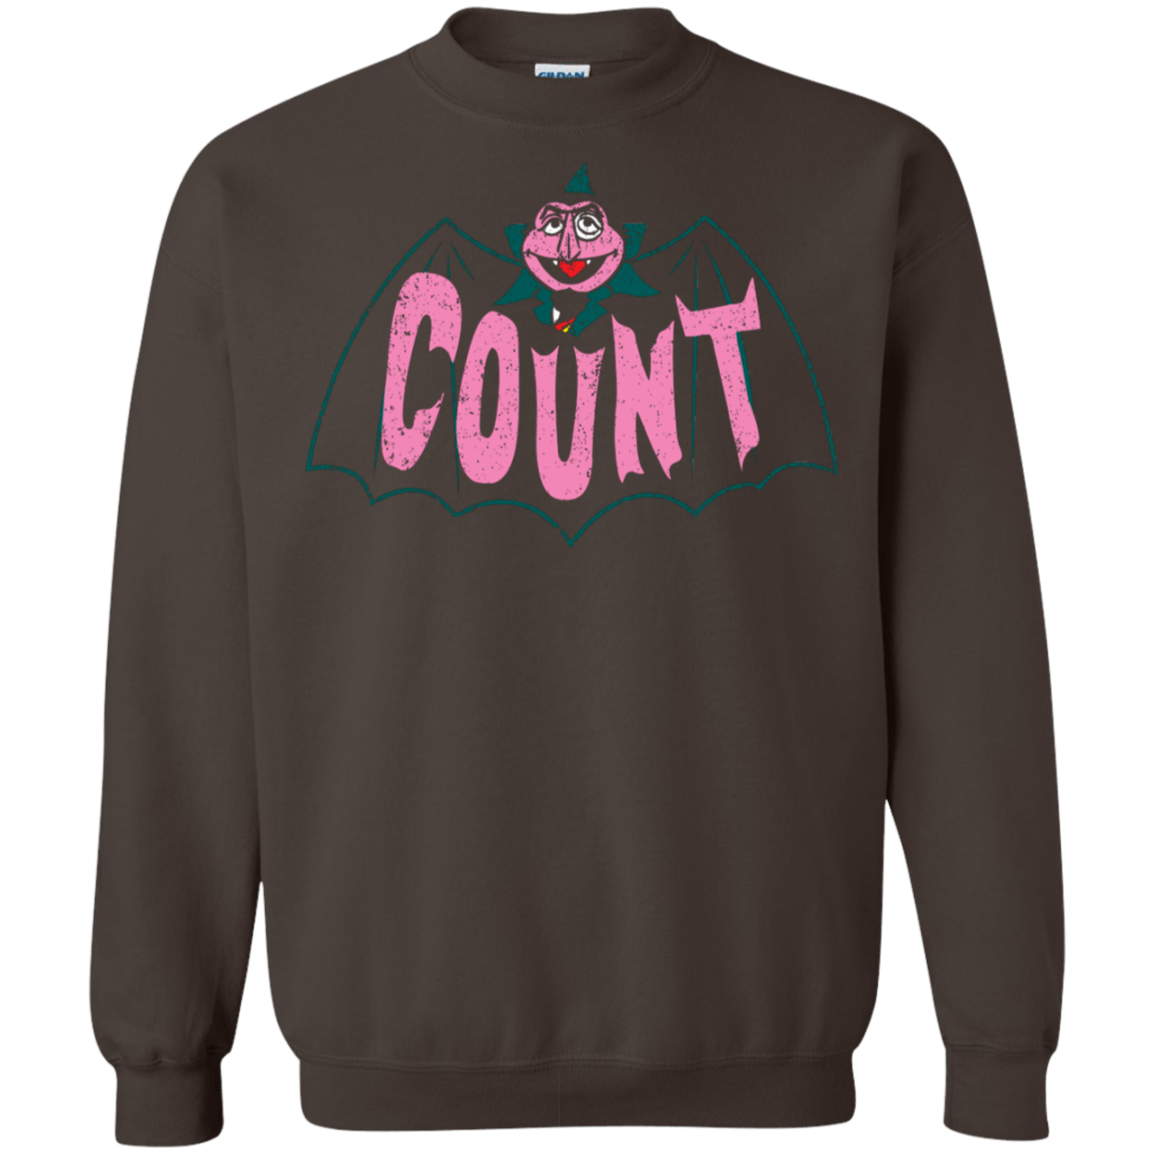 Sweatshirts Dark Chocolate / S Count Crewneck Sweatshirt